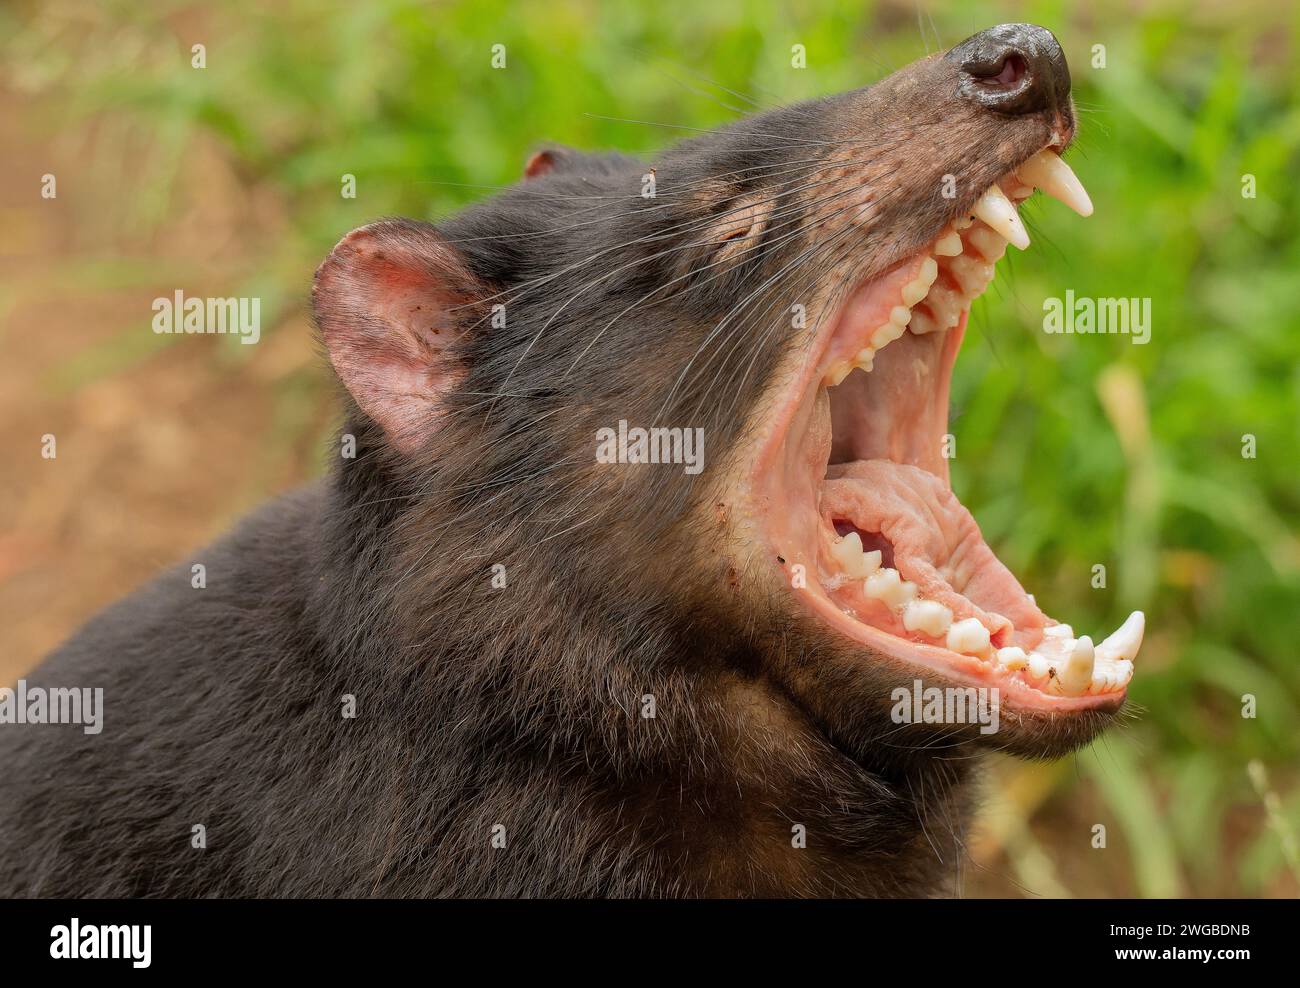 Tasmanian devil, Sarcophilus harrisii, yawning or baring its teeth. Tasmania. Stock Photo